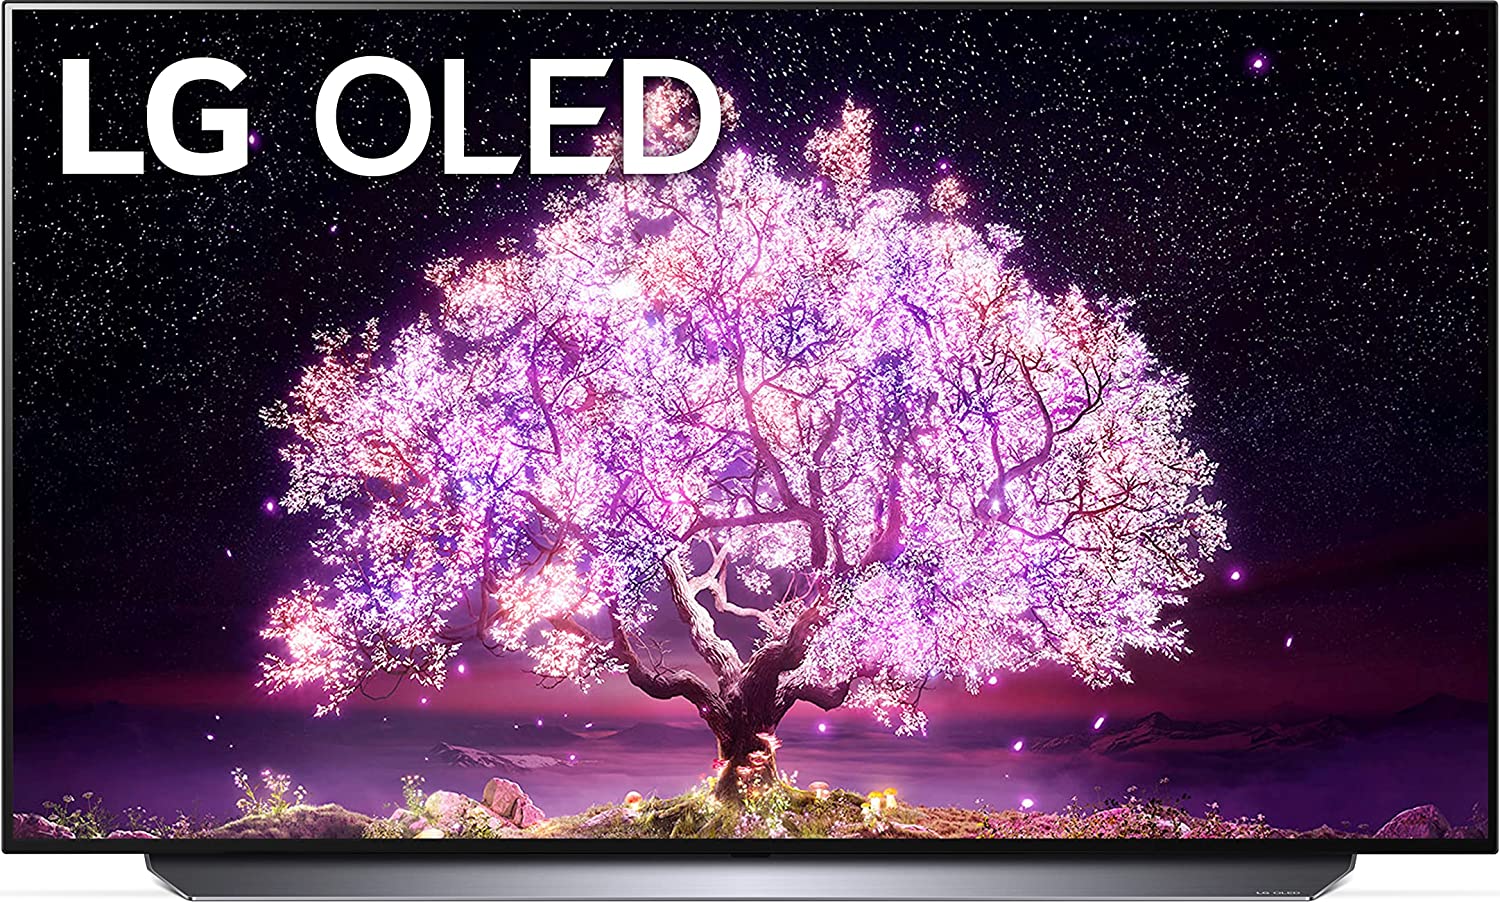 Wahnsinnsdeal! 4K TV LG OLED mit satten 900 Euro Rabatt bei